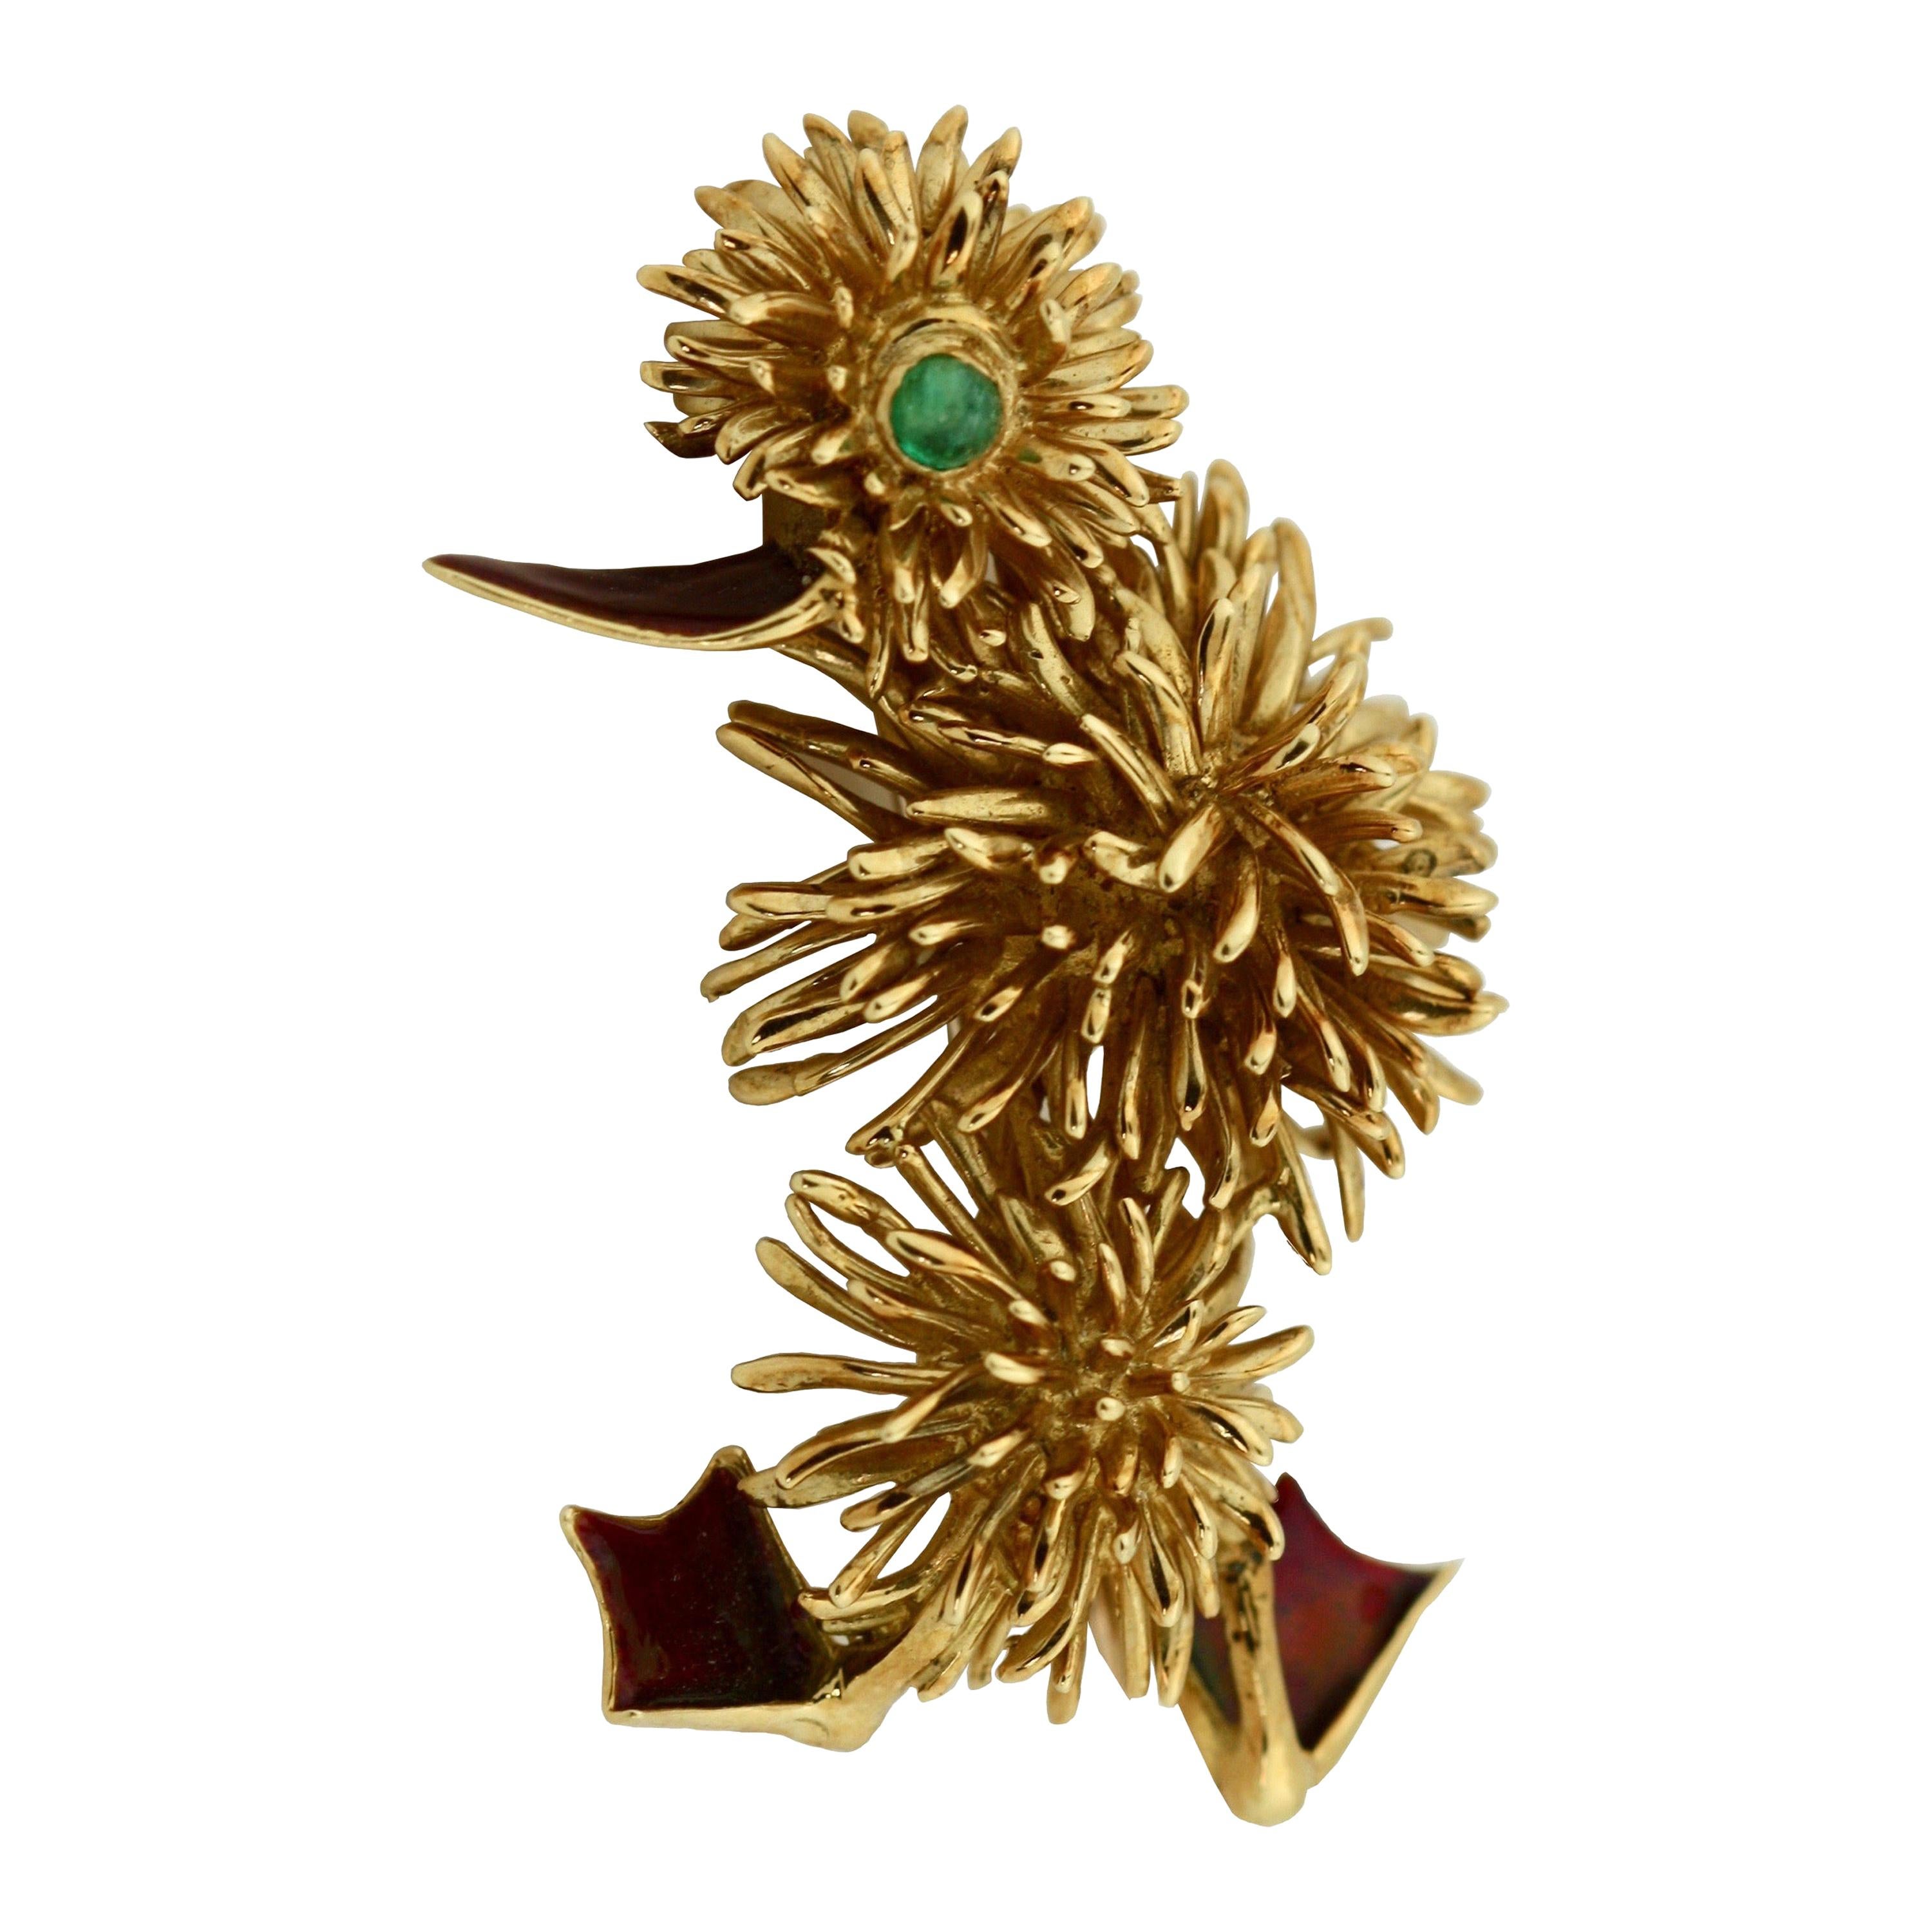 18 Karatt Gold Brooch, Kutchinsky, 1960s Design to Form a Duck